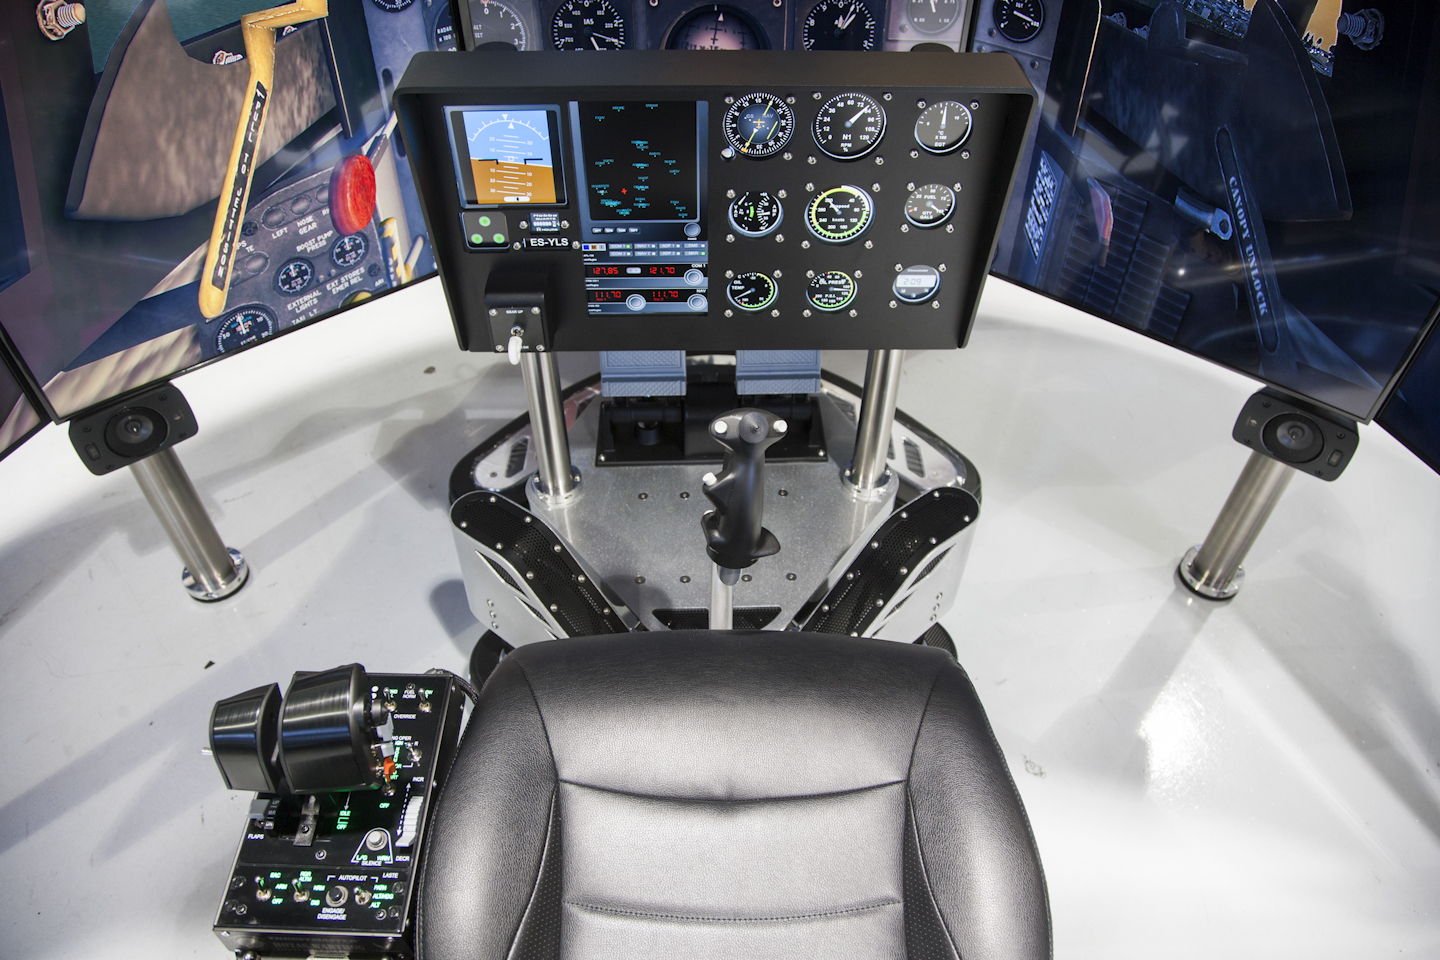 flight simulation controls